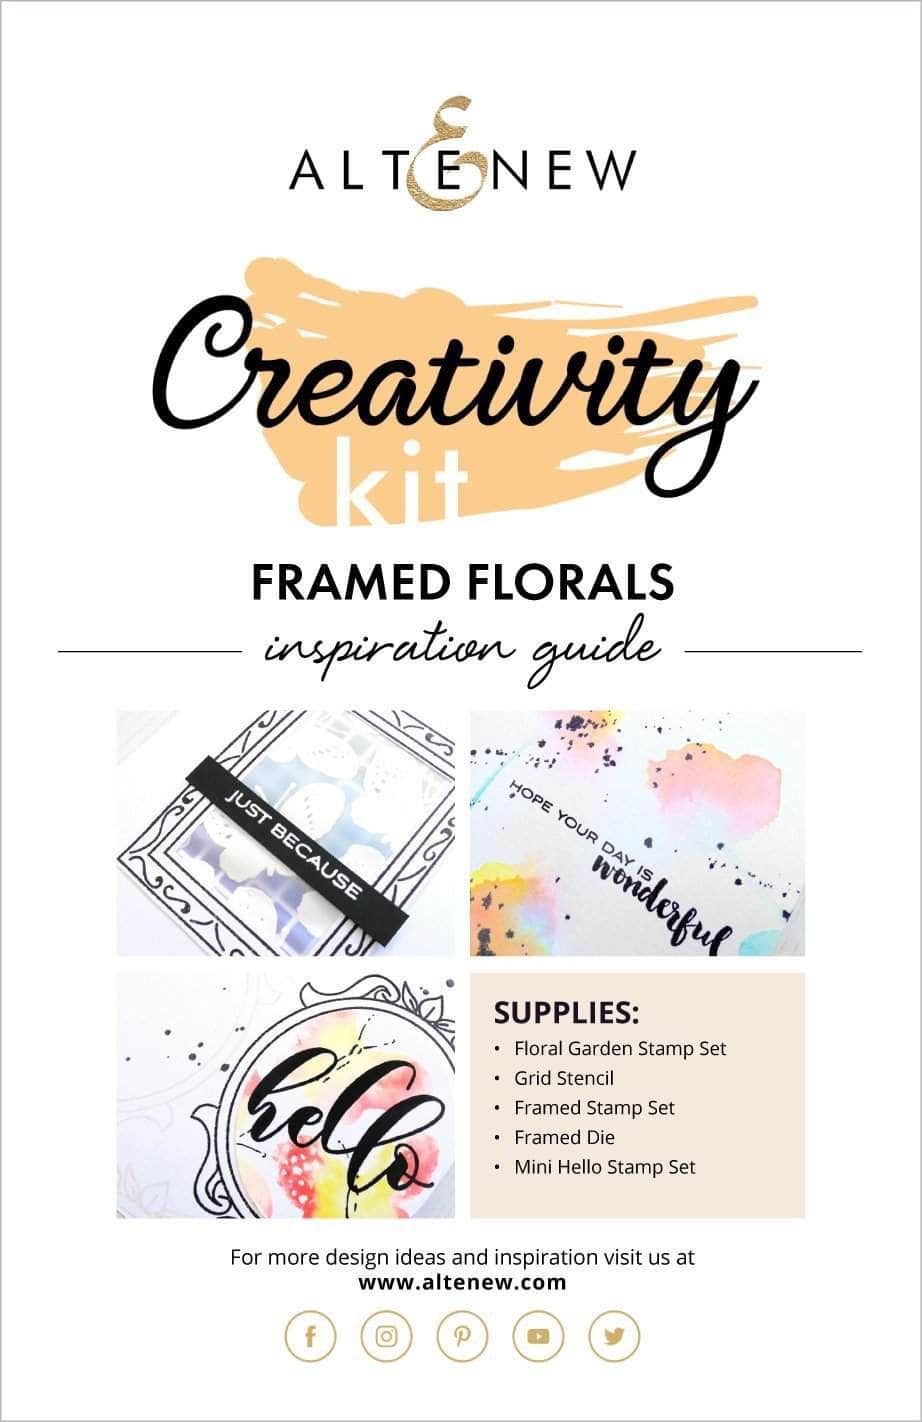 55Printing.com Printed Media Framed Florals Creativity Kit Inspiration Guide